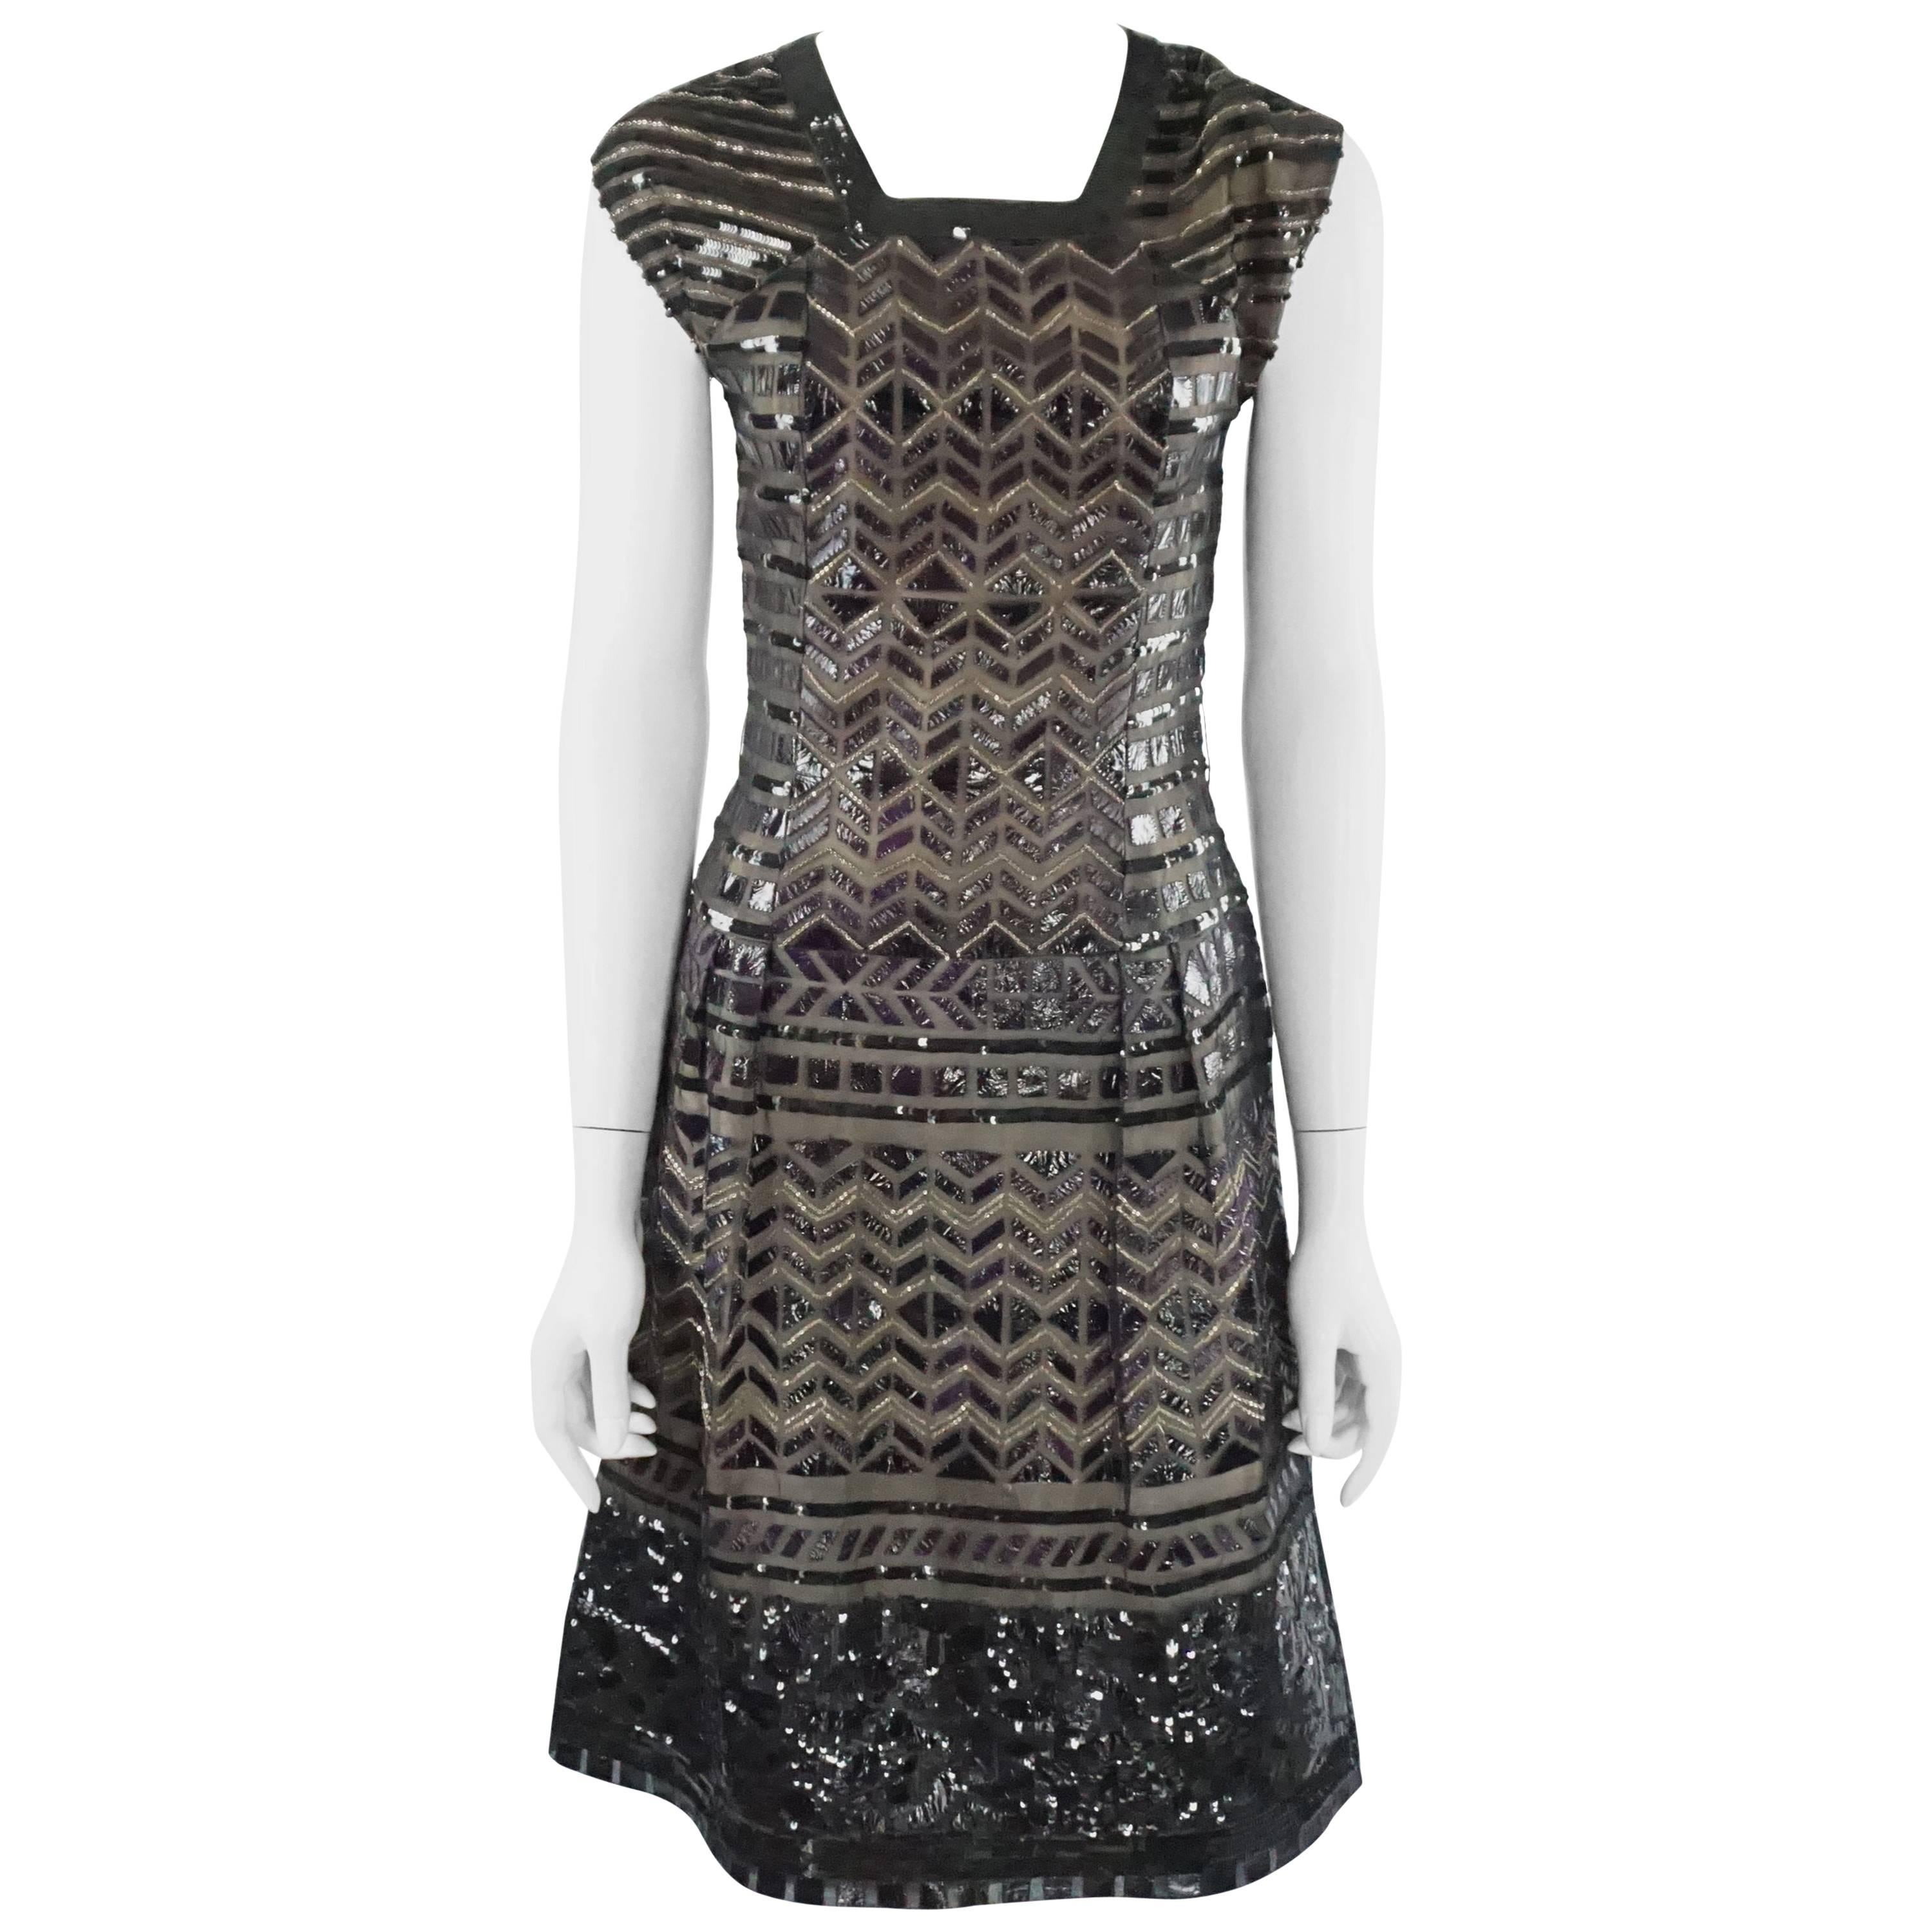 Oscar de la Renta Black and Brown Sequin and Leather Applique Dress - M For Sale